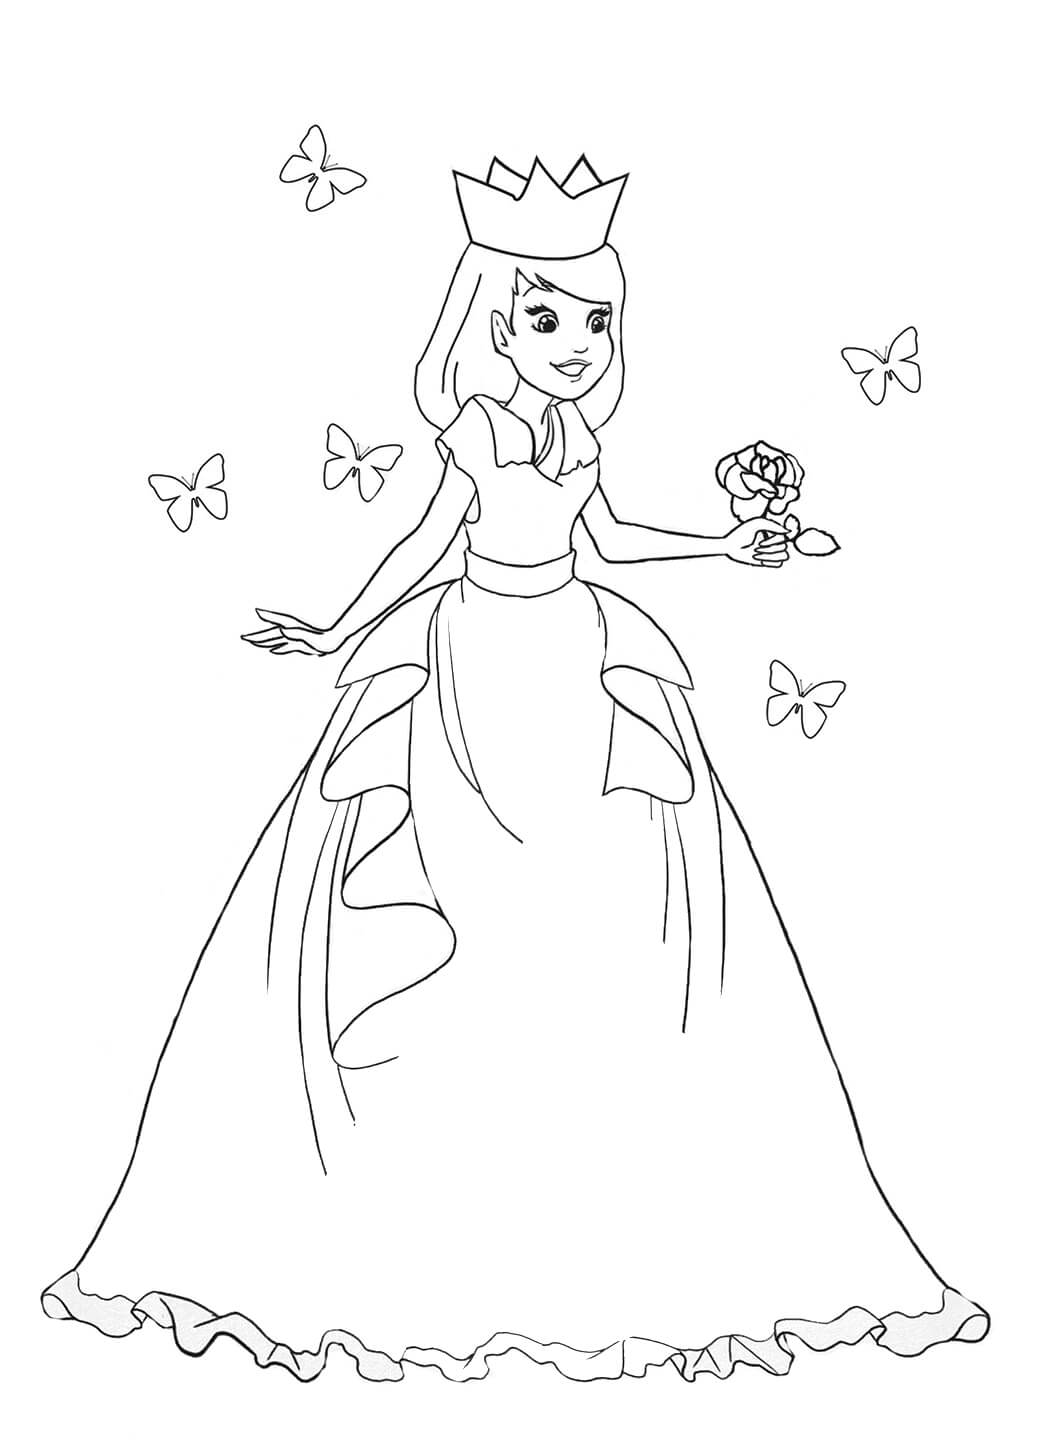 Prinsesse Holder Blomst Med Sommerfugle Tegninger til Farvelægning